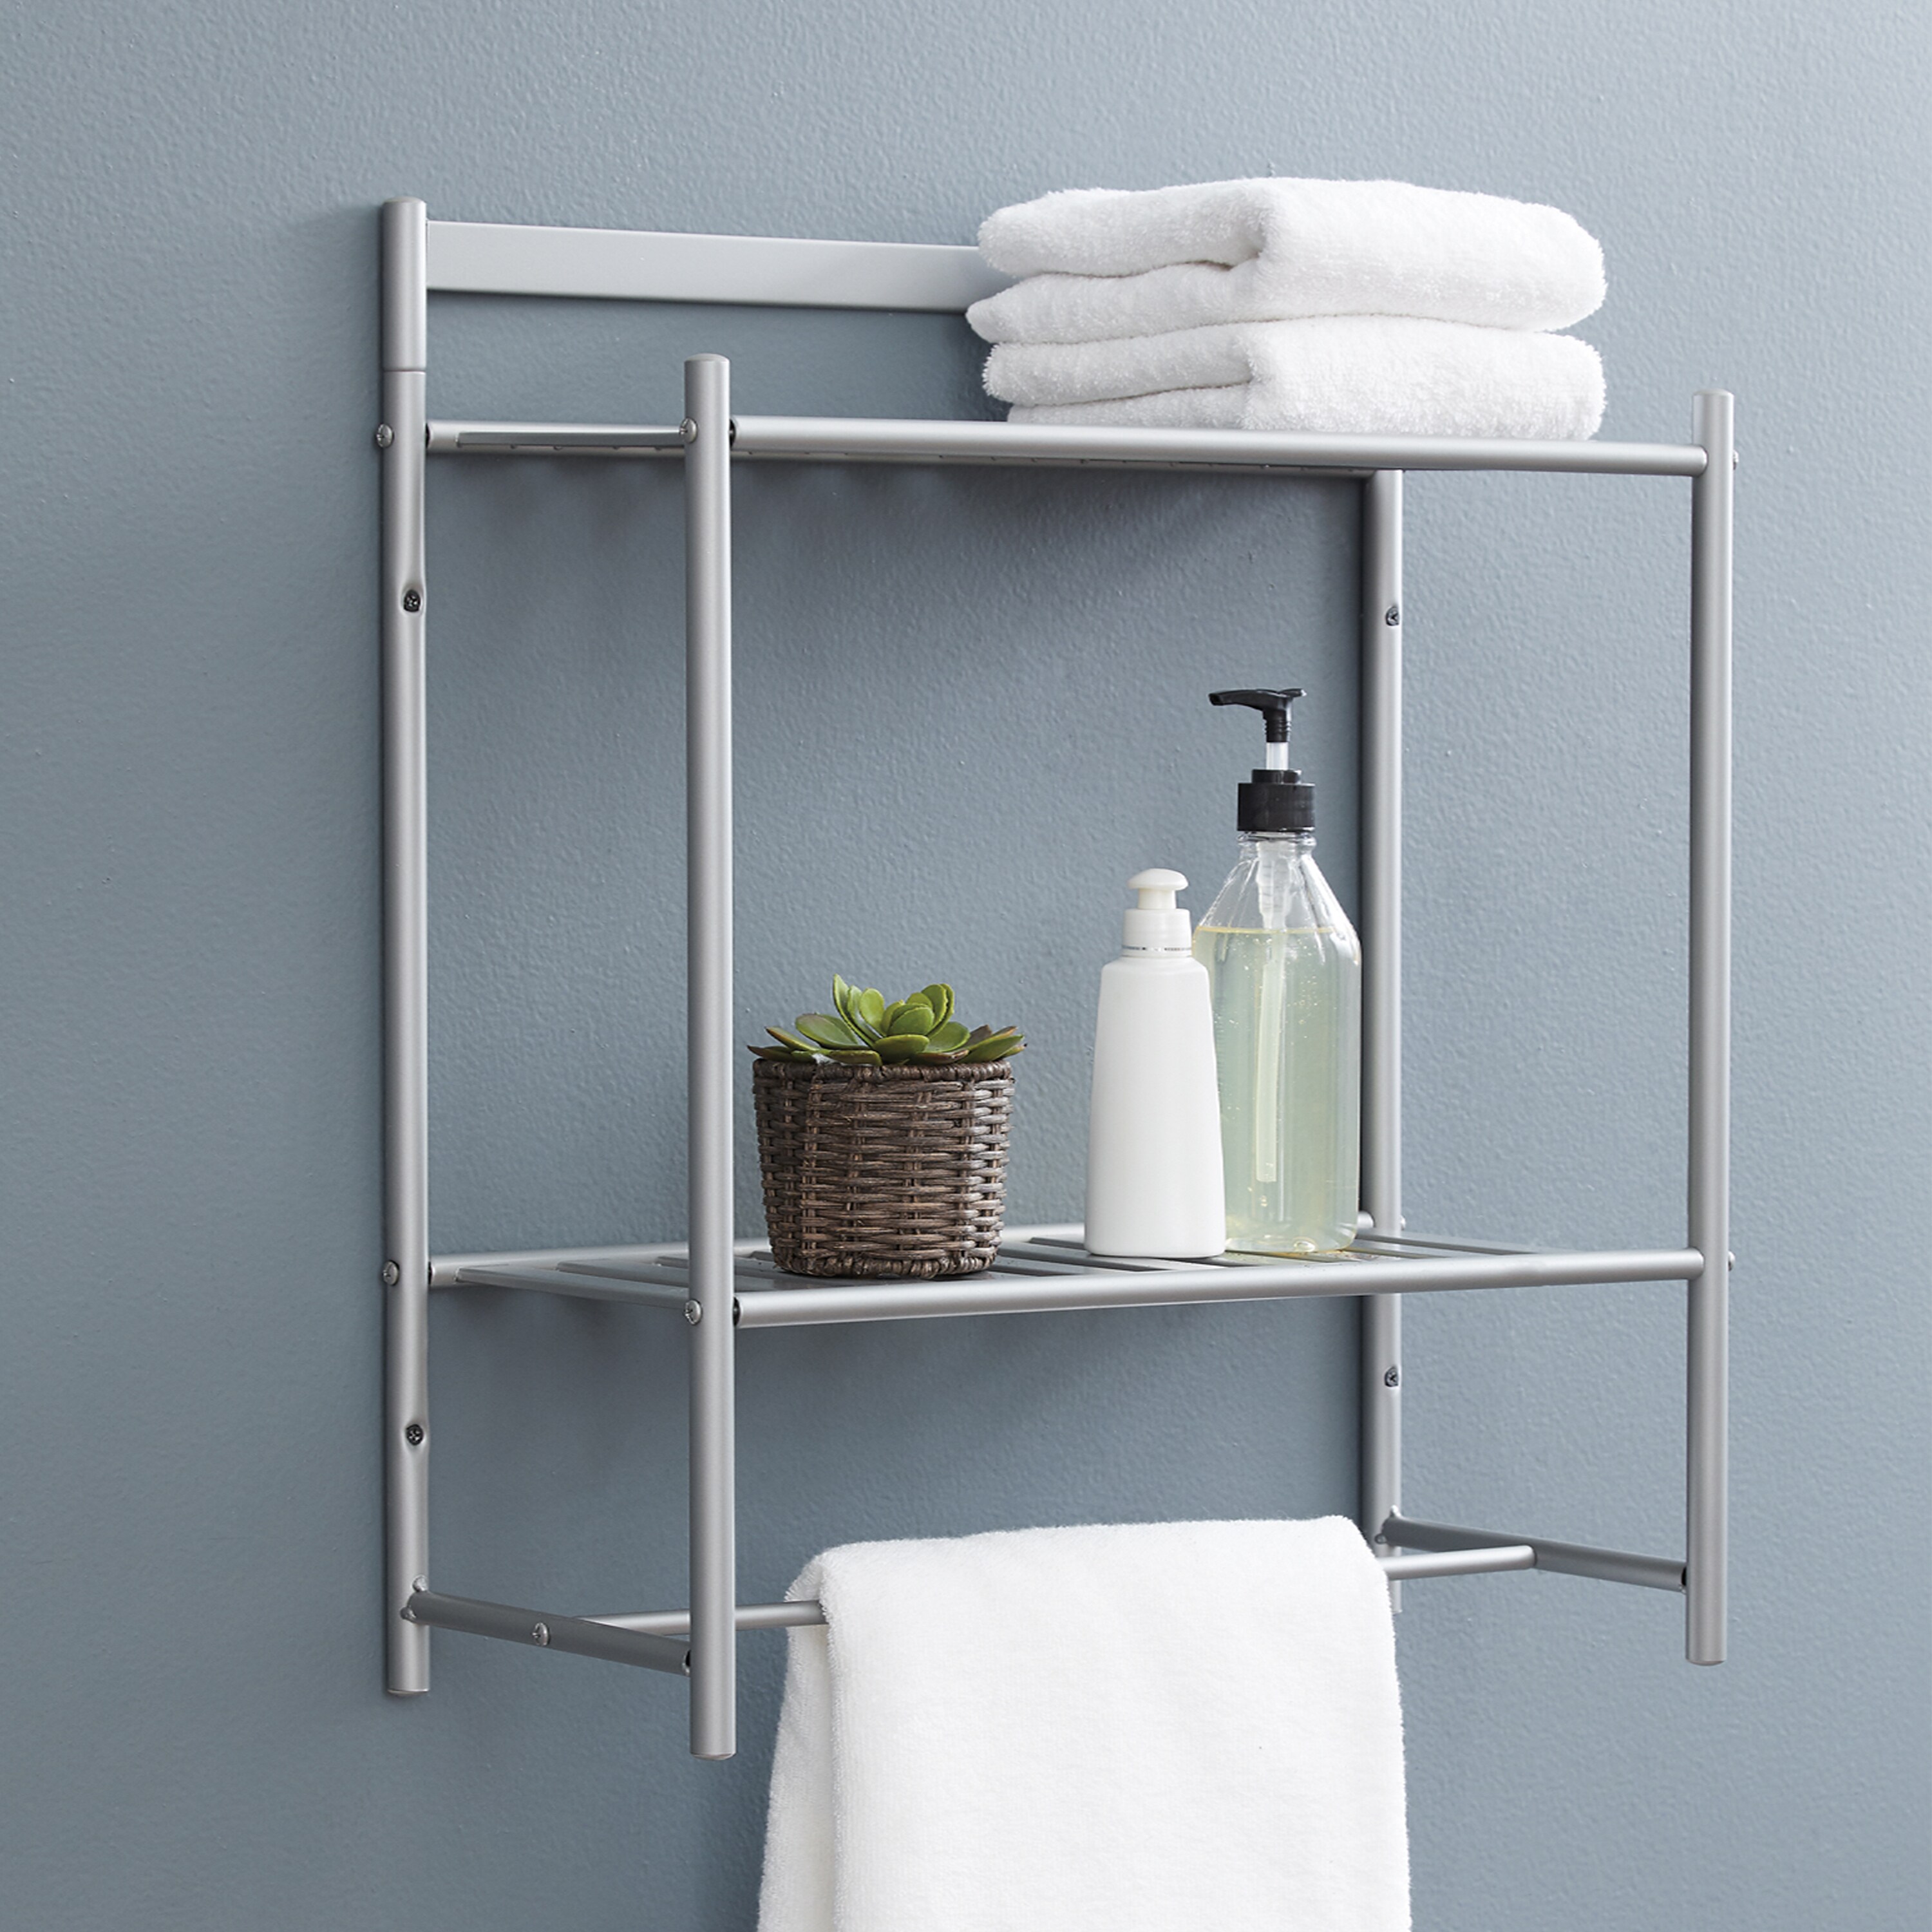 2 Tier Silver Chrome Metal Wall Mounted Bathroom Shelf Organizer with  Hanging Towel Rack, 17 x 10 x 22 in.